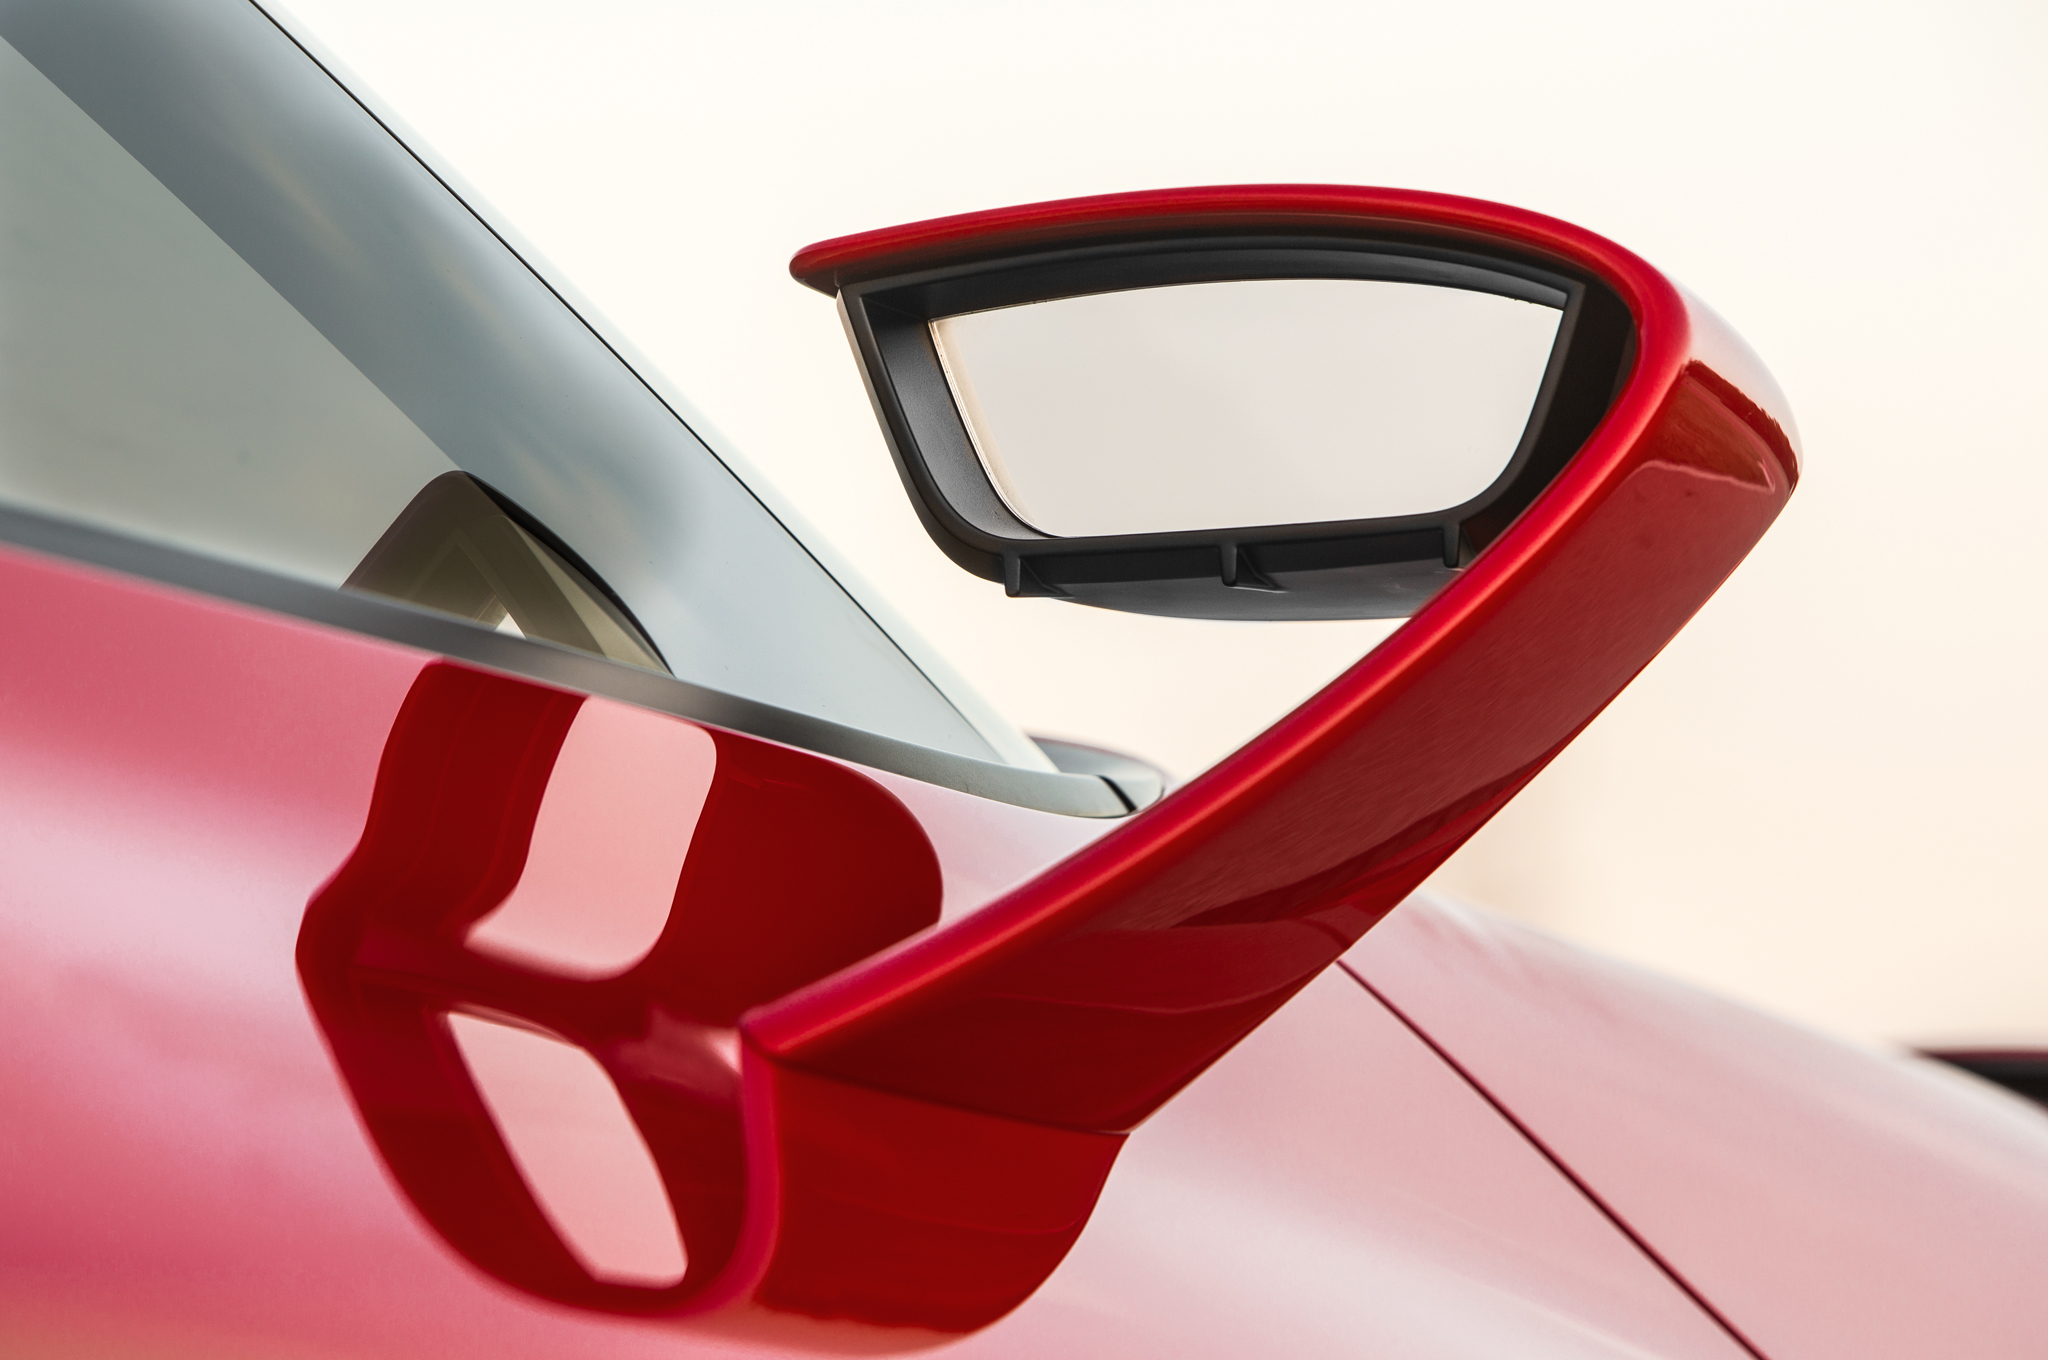 Toyota-FT-1-rearview-mirror-02.jpg